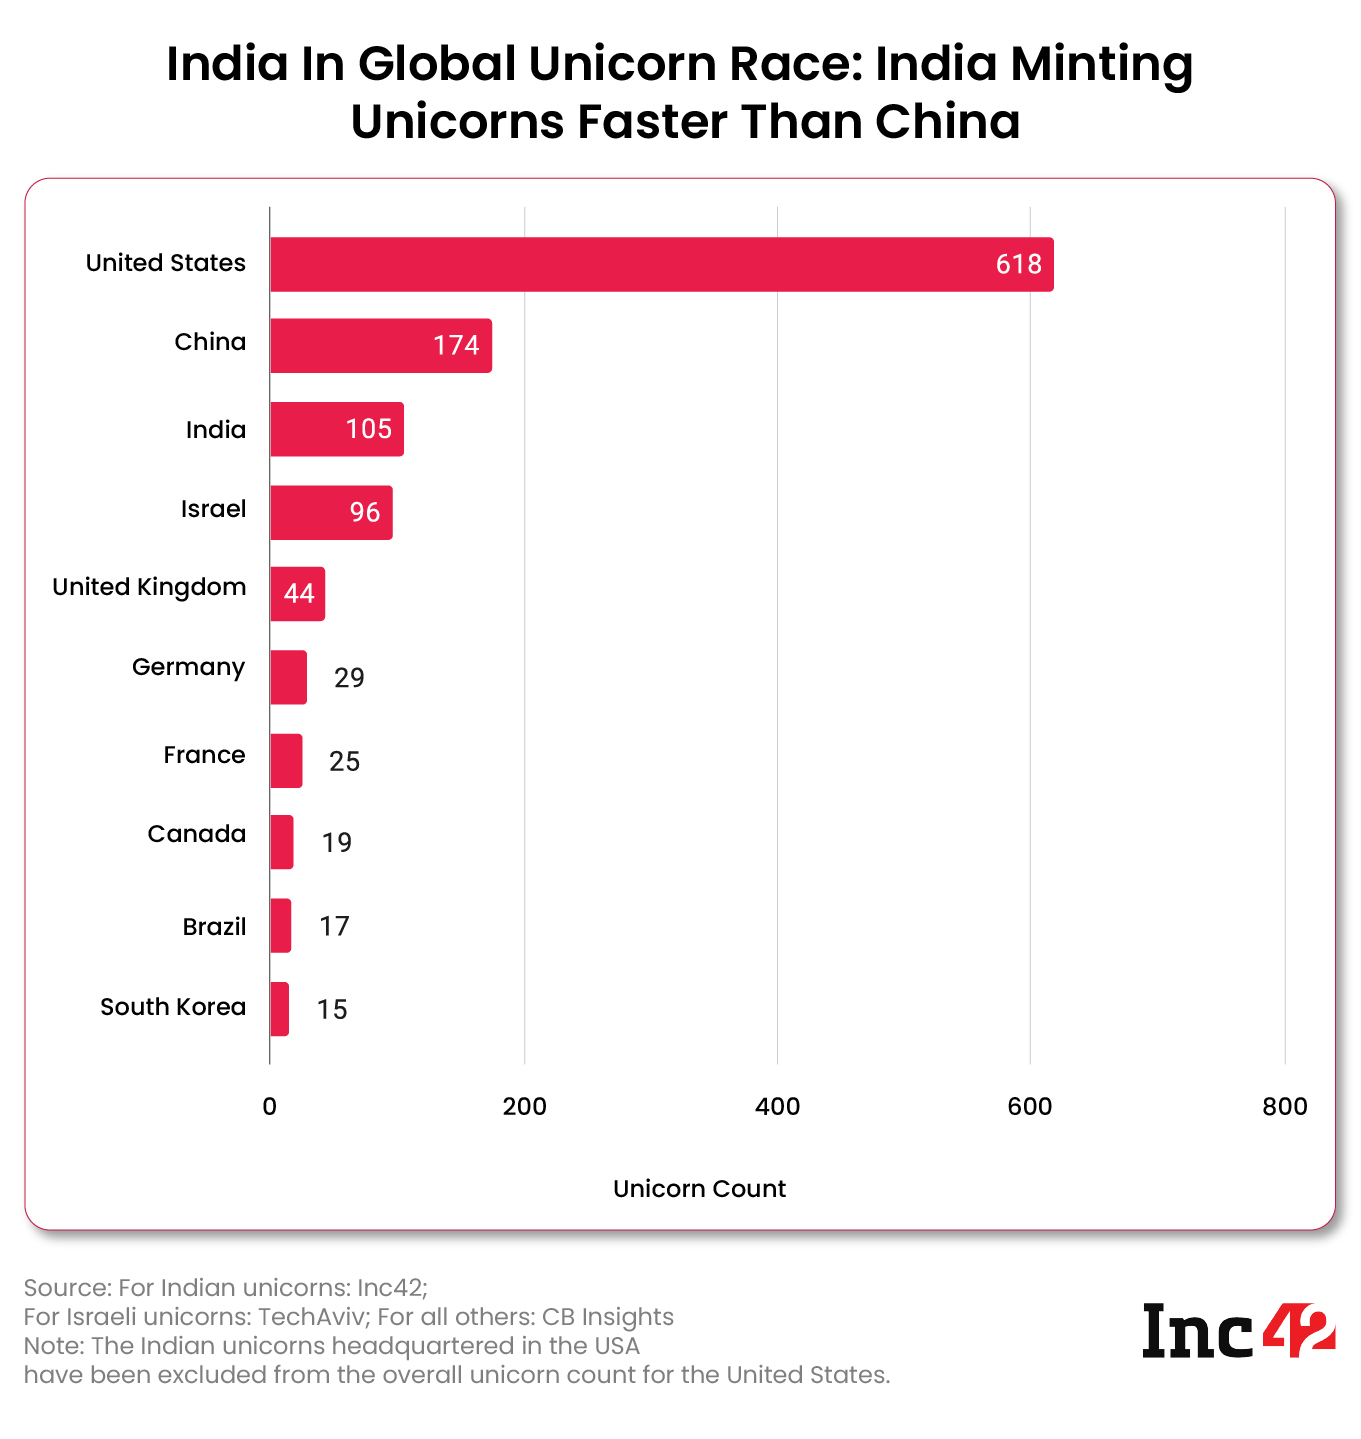 India producing unicorns faster than China